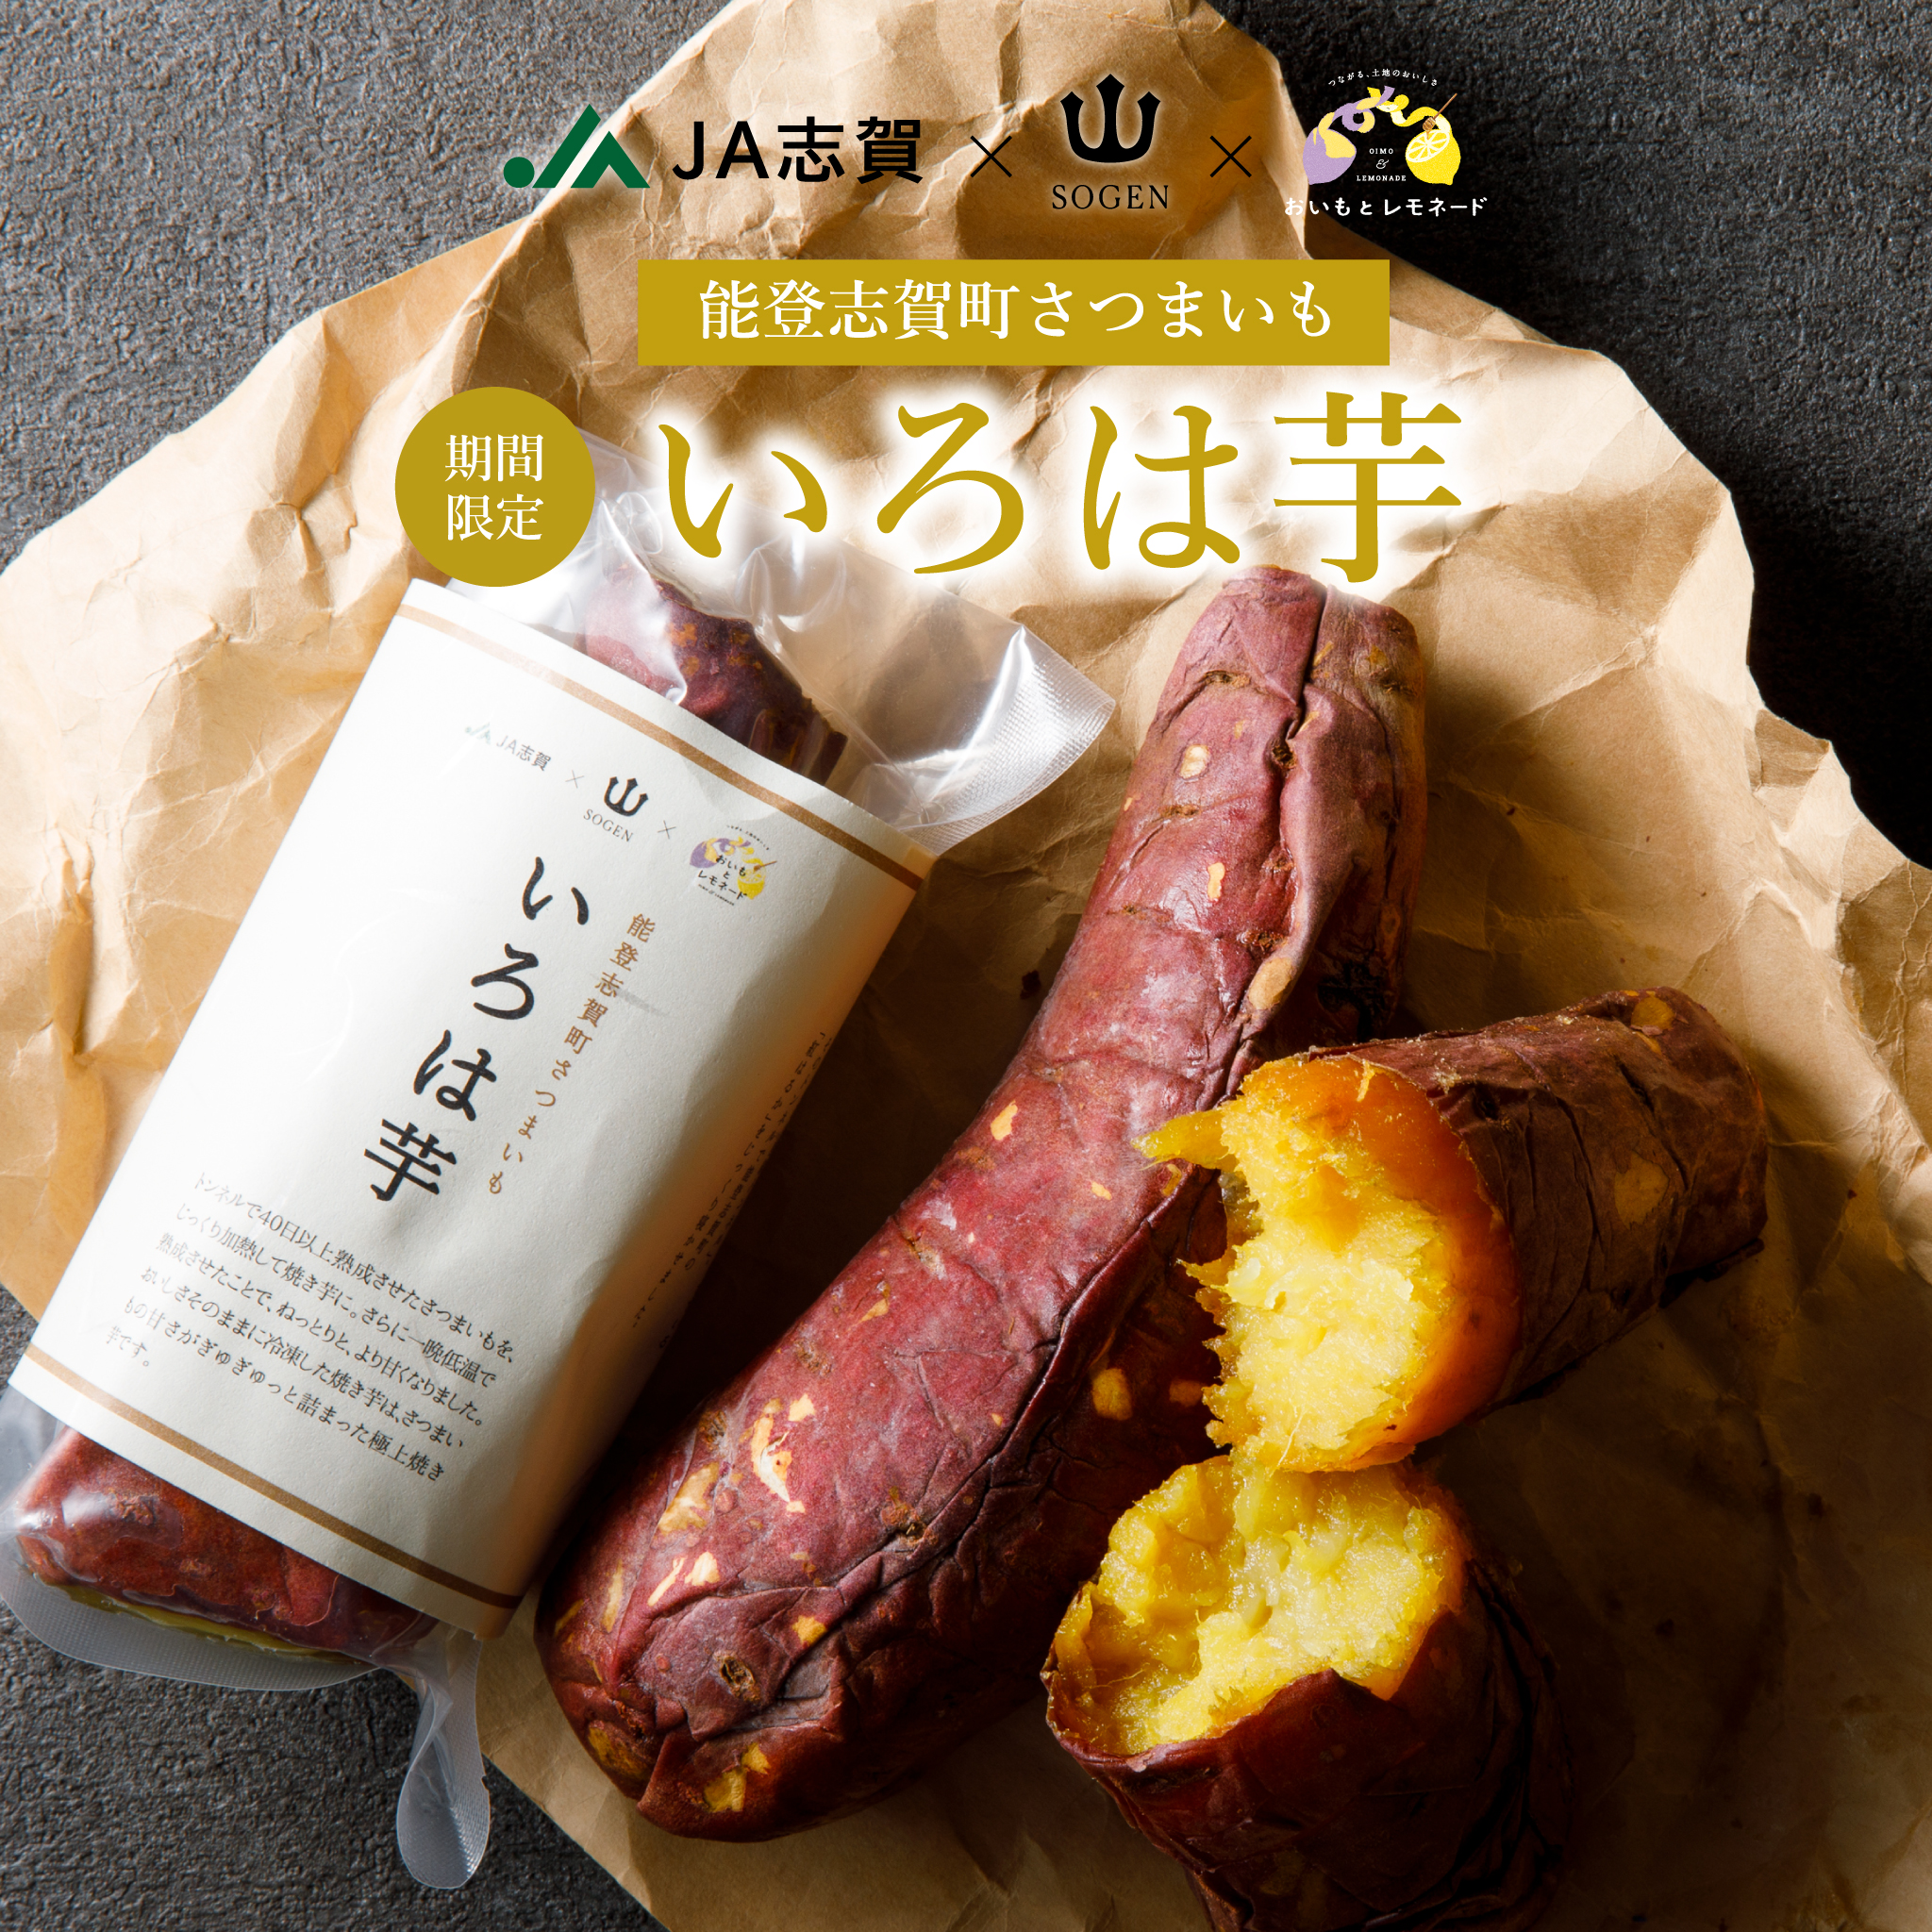 JA志賀・宗玄酒造・ハチバン3社協業 能登志賀町産さつまいもを使った新しいブランド芋を開発